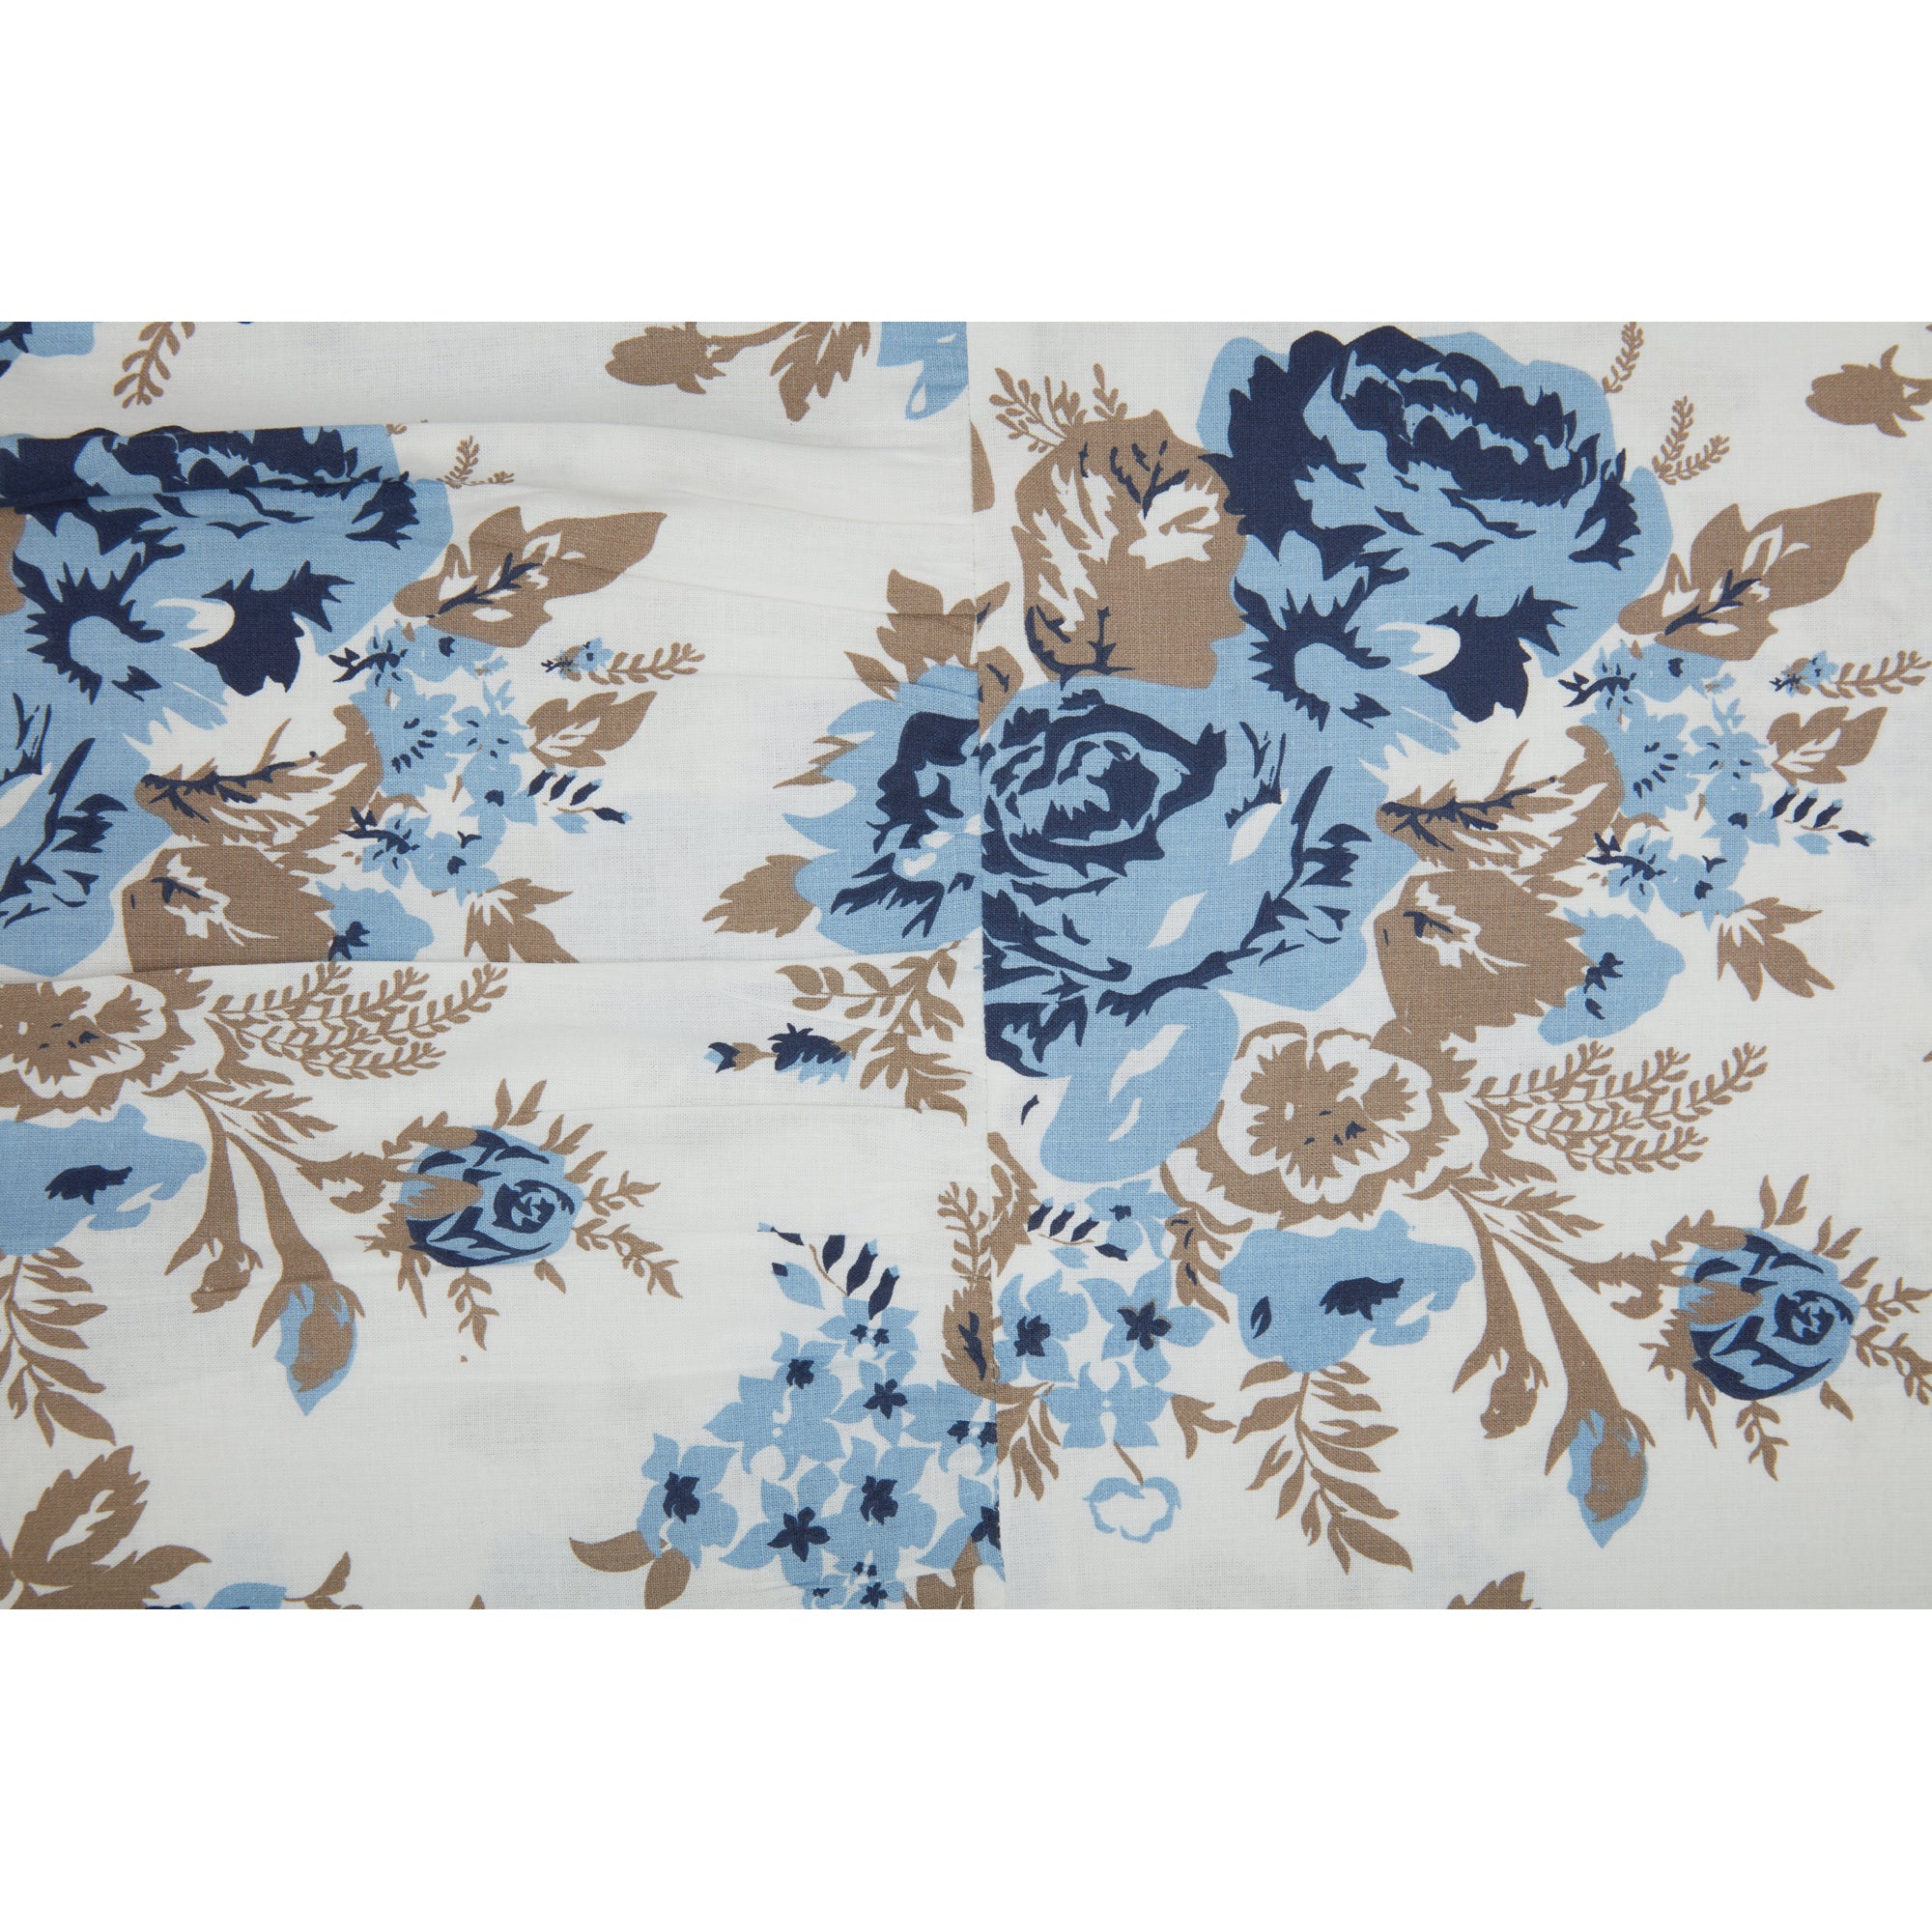 Annie Blue Floral Ruffled Standard Pillow Case Set of 2 21x26+8